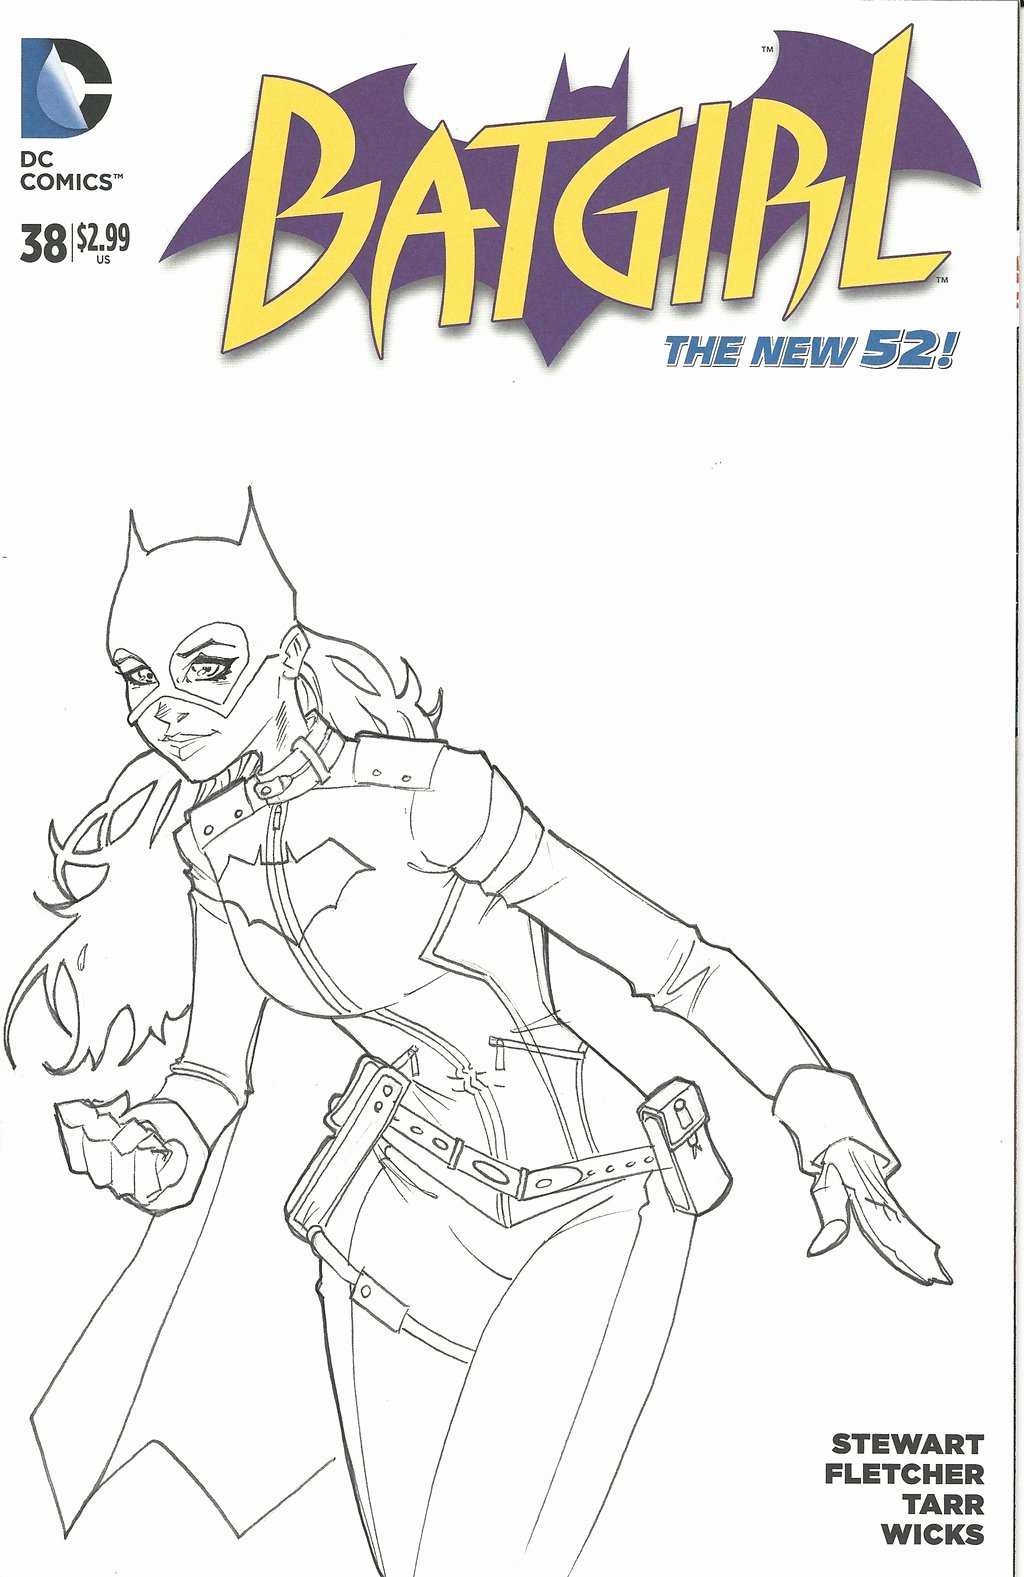 Comic Book Cover Template Inspirational Batgirl Sketch Cover by Brianvander On Deviantart